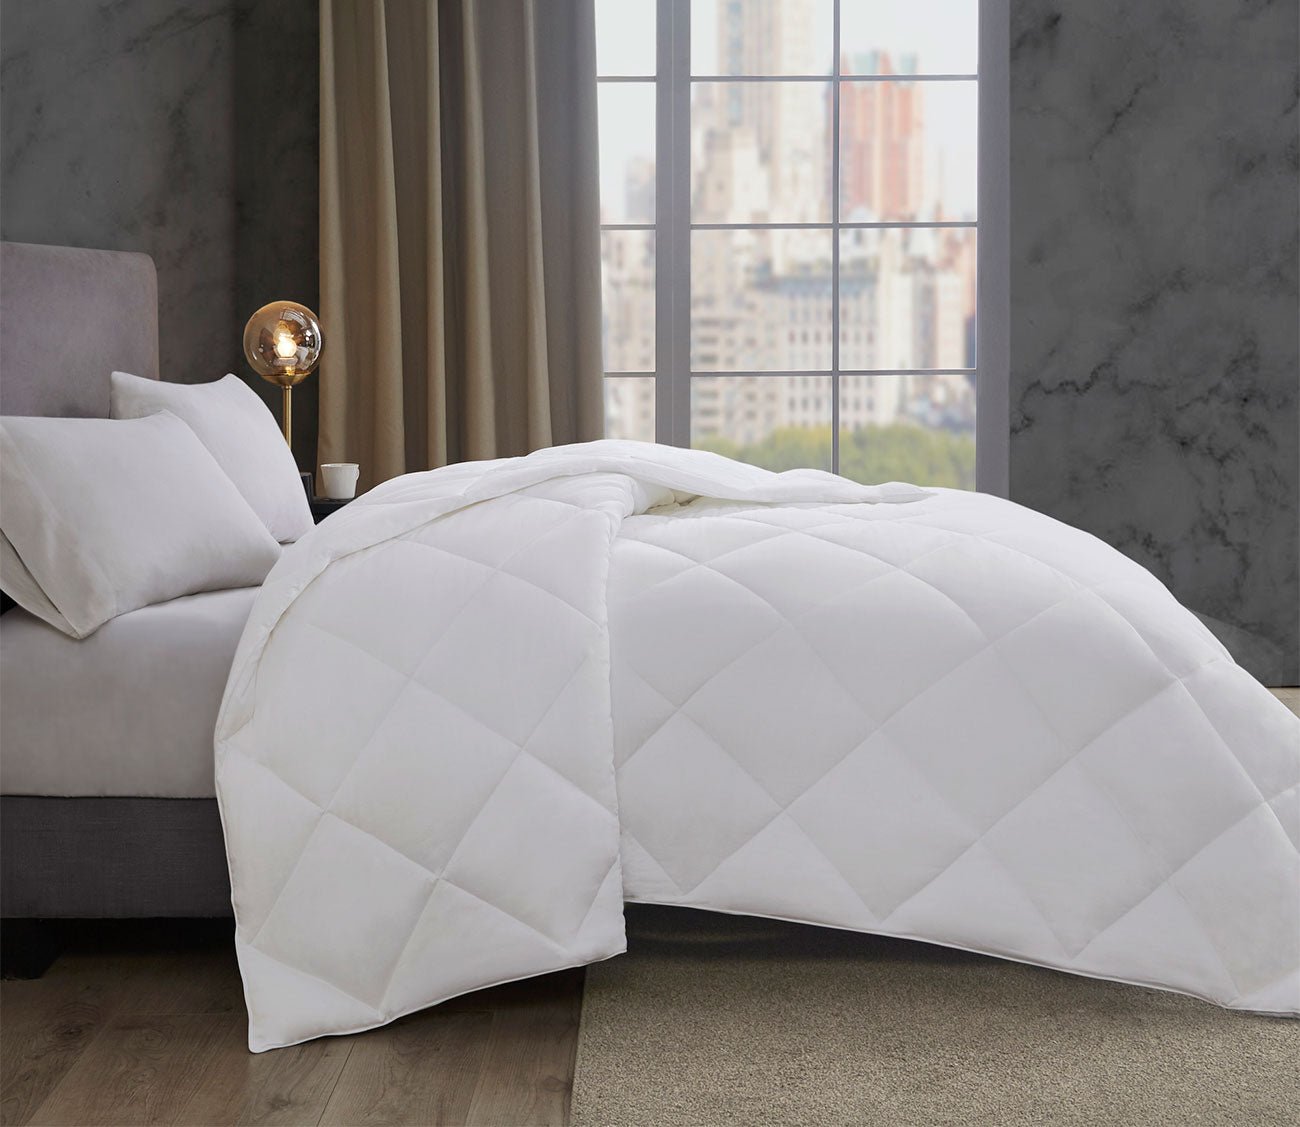 Sleep Philosophy Warmer Sateen White Down Alternative Thinsulate Comforter, Full/Queen, Cotton